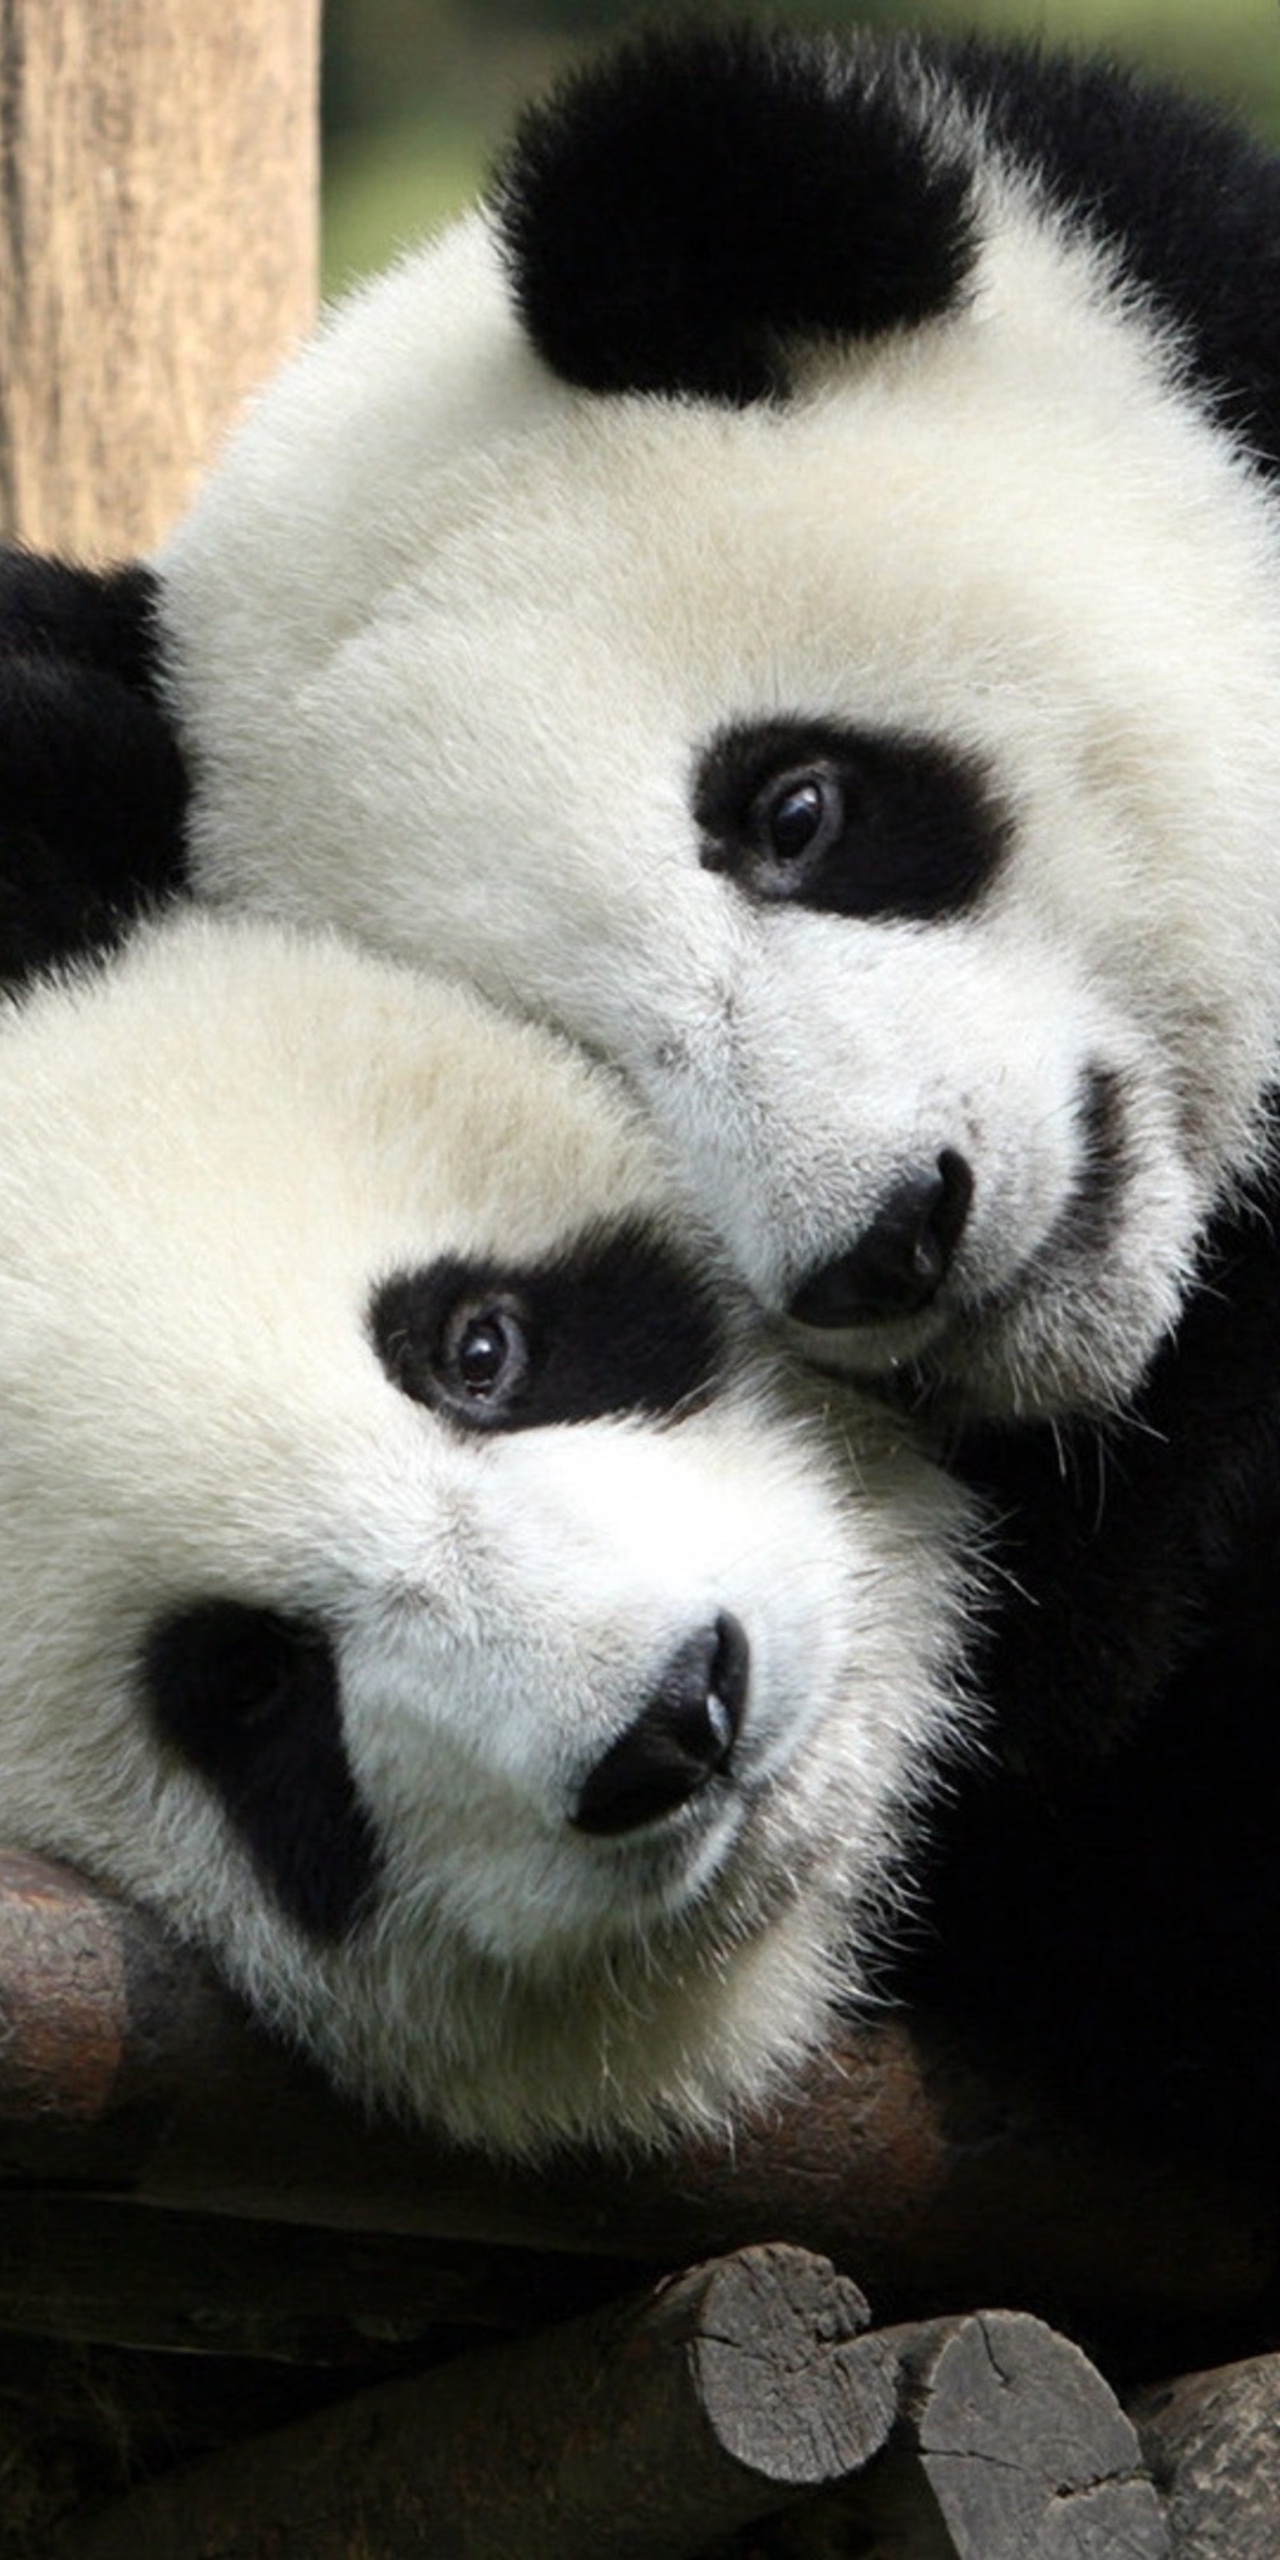 Image: Panda, couple, stay, sticks, tree